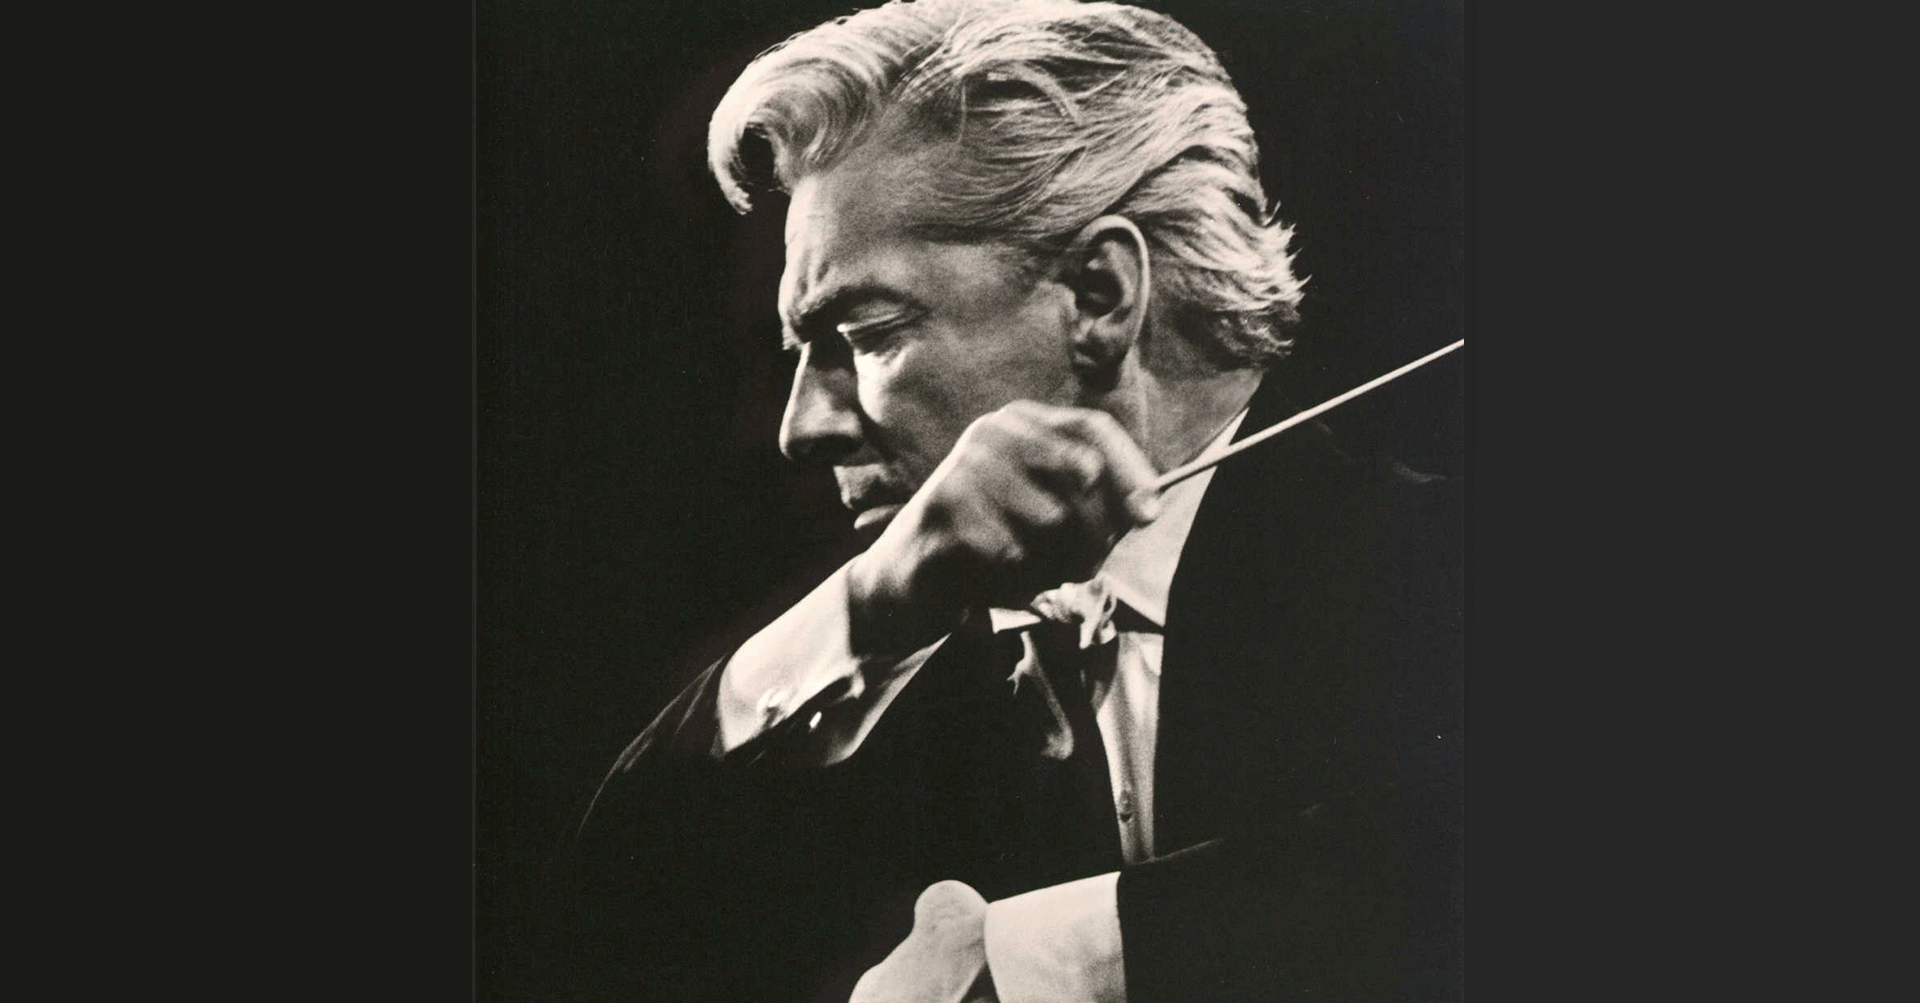 Zeroing in on Karajan